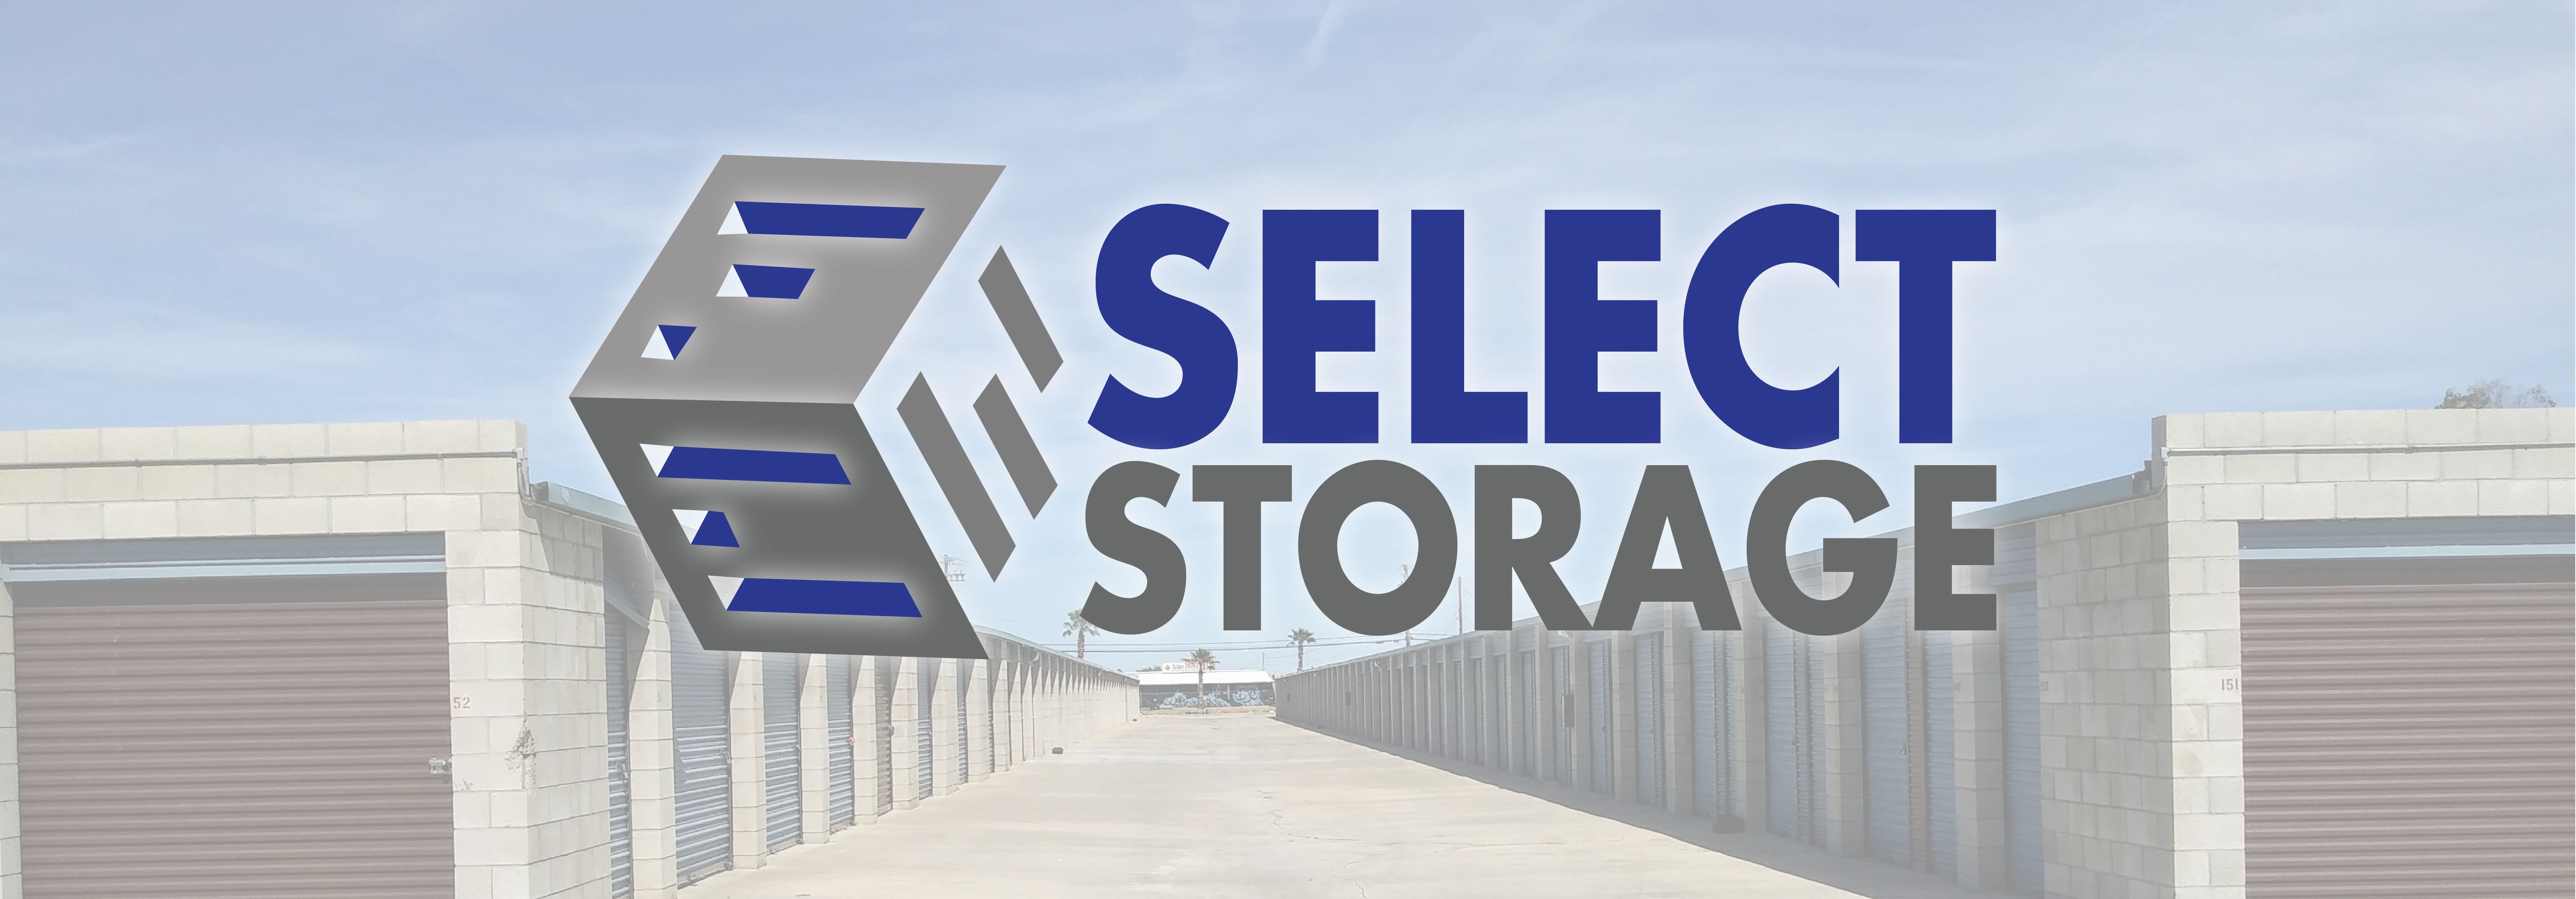 Select Storage South in Twentynine Palms, CA